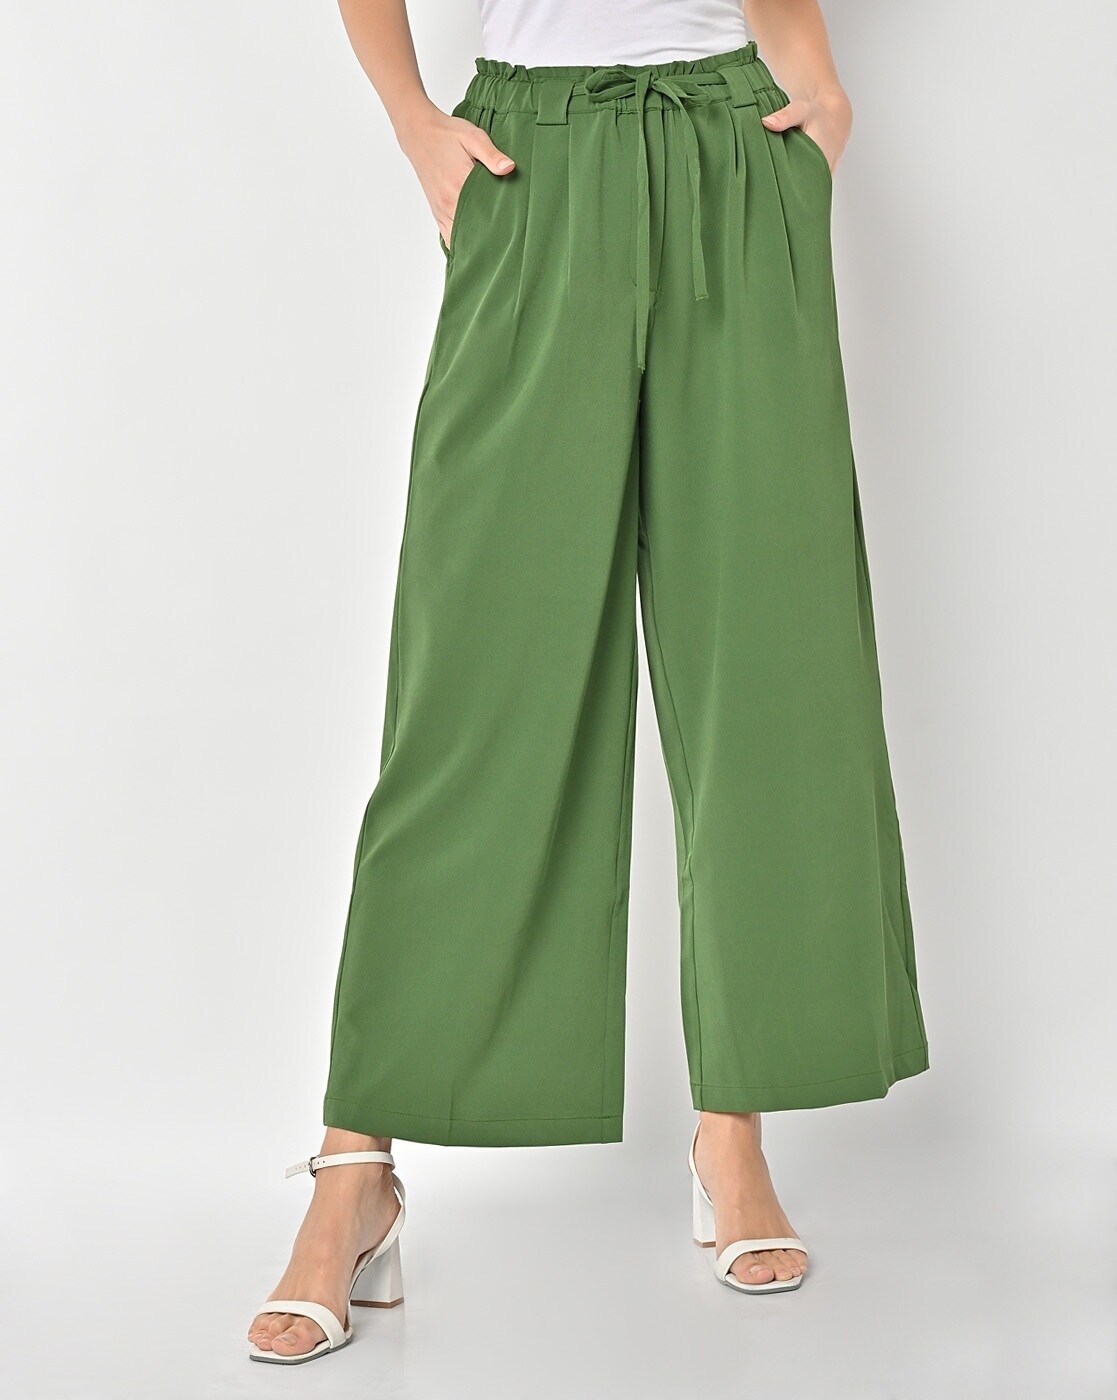 Women Flowy Wide Leg Pants Elastic Waistband Drawstring Casual Palazzo Pants  with Side Pocket Pants Women (Green, XXXL) at Amazon Women's Clothing store